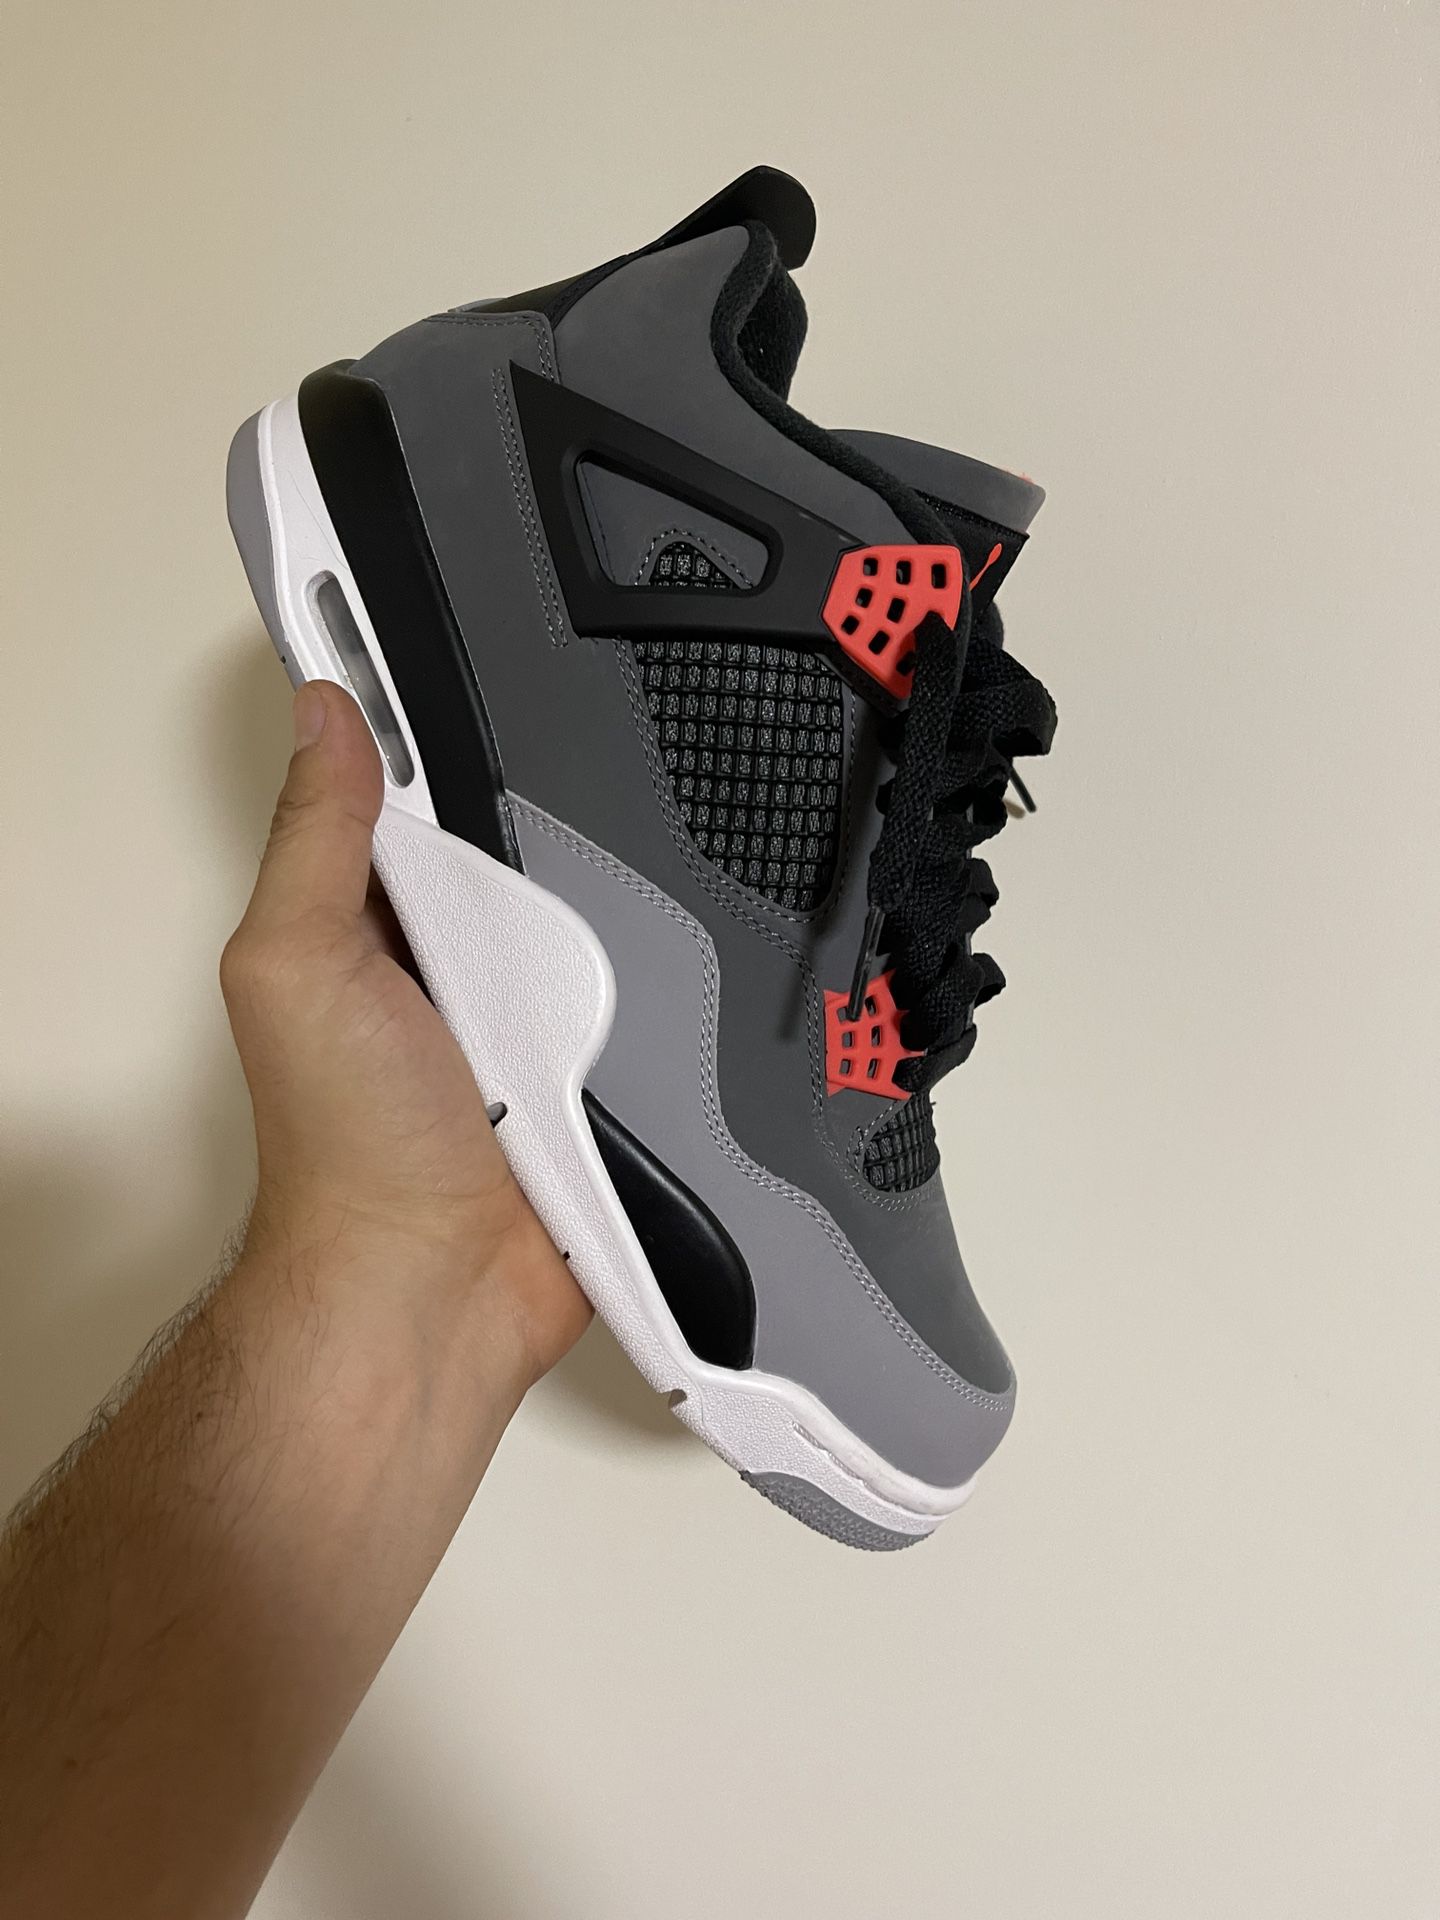 Jordan 4 Infrared 10.5